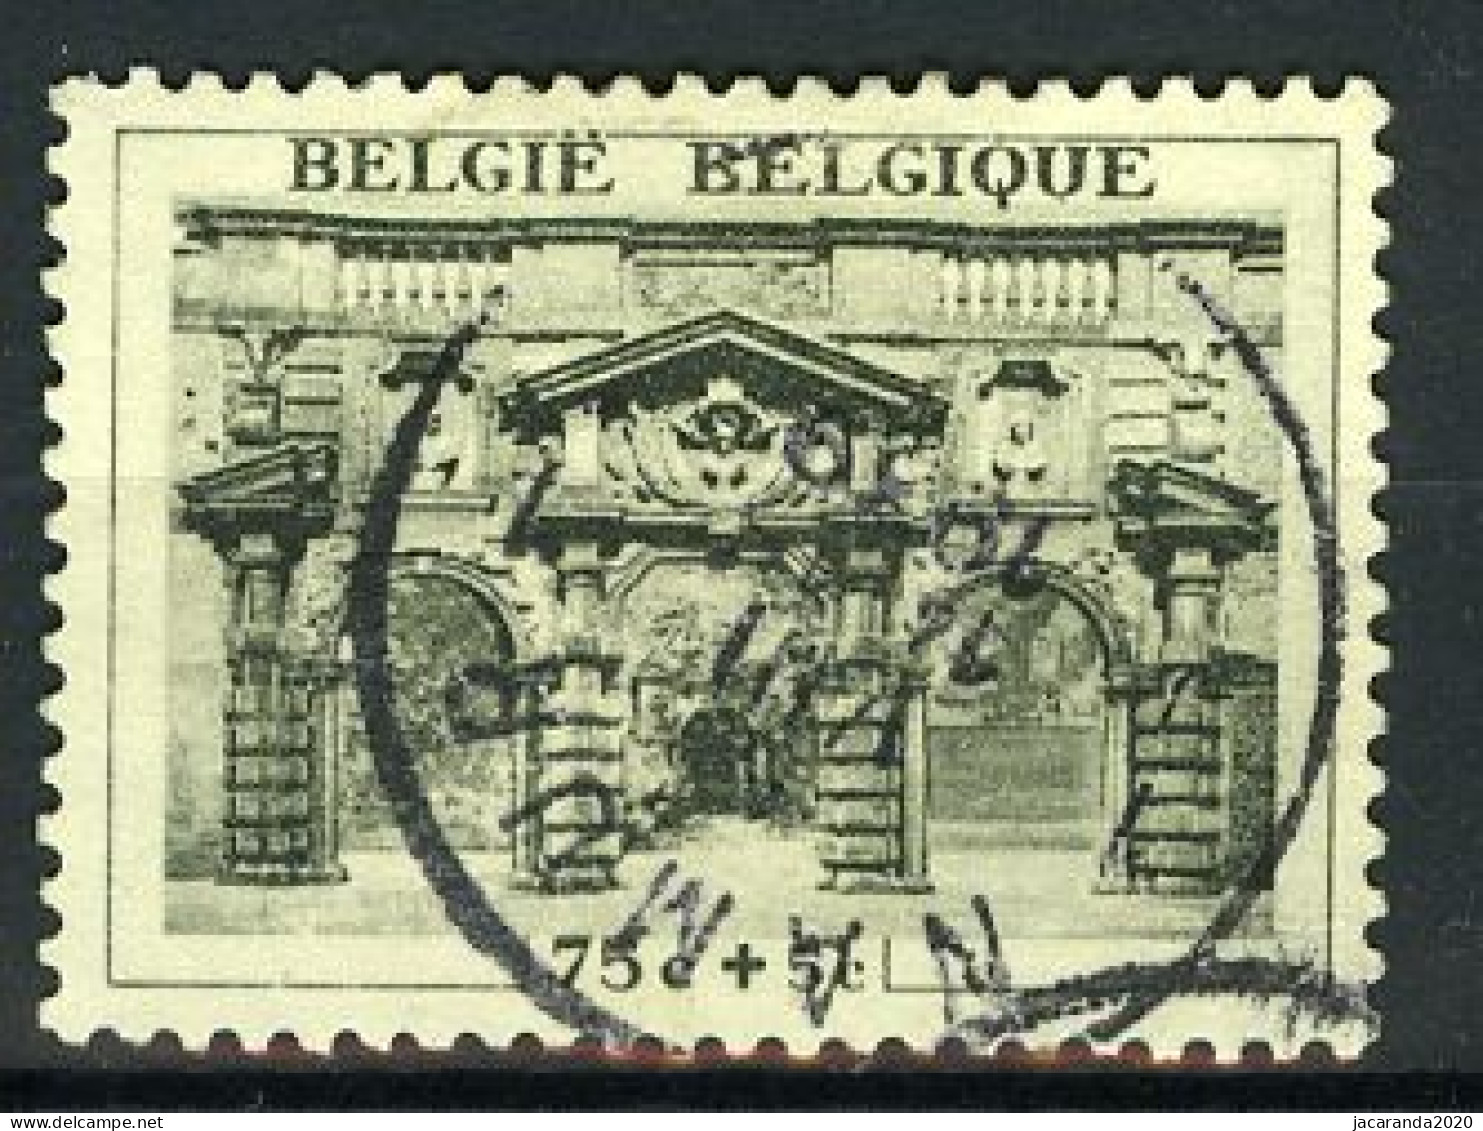 België 506 - Rubenshuis - Antwerpen - Paviljoen Van Hercules - Gestempeld - Oblitéré - Used - Oblitérés